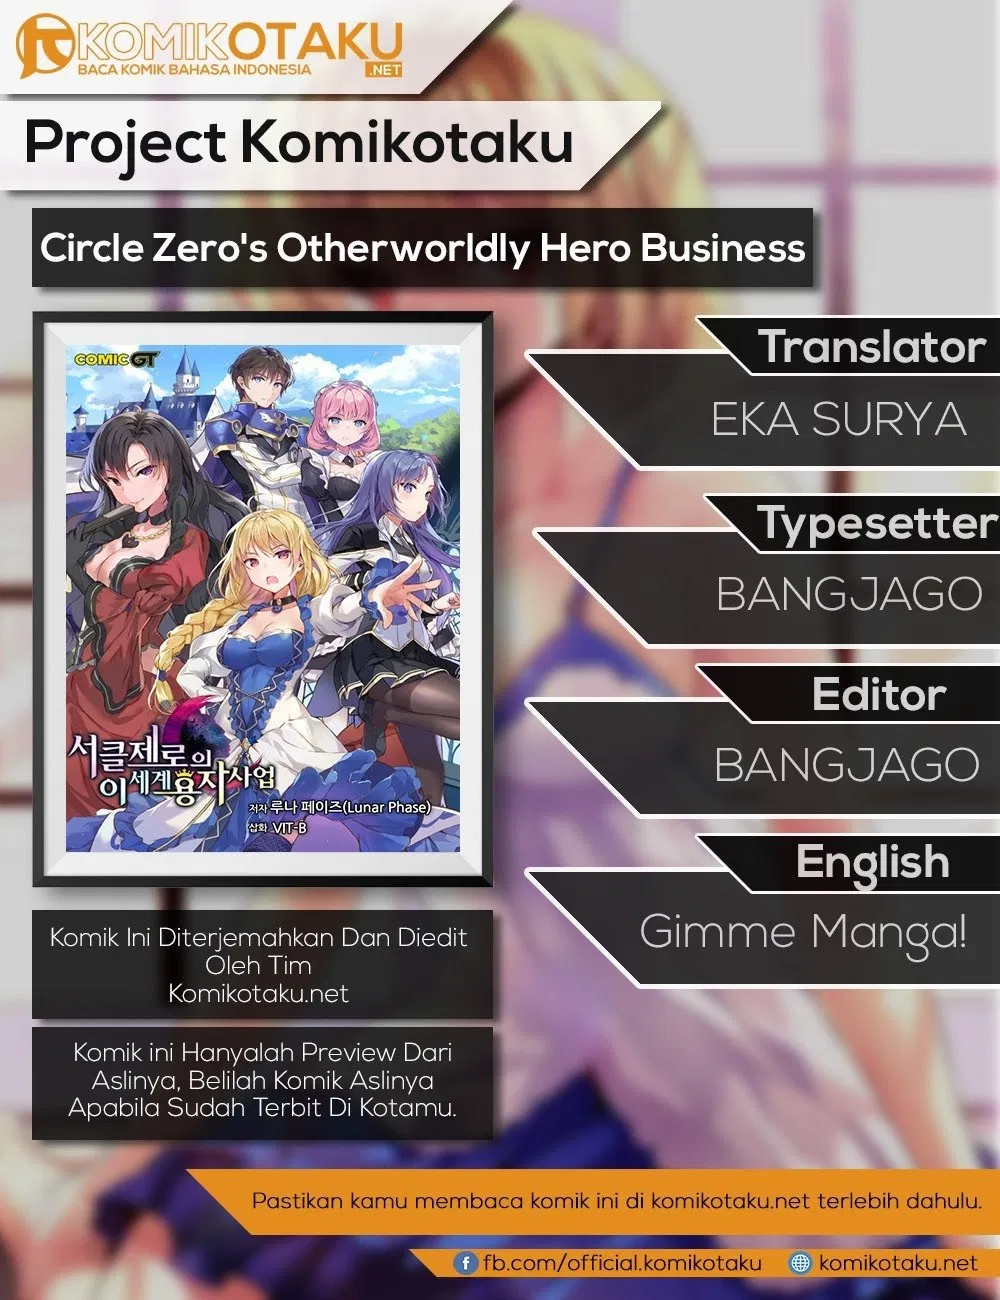 Circle Zero’s Otherworldly Hero Business Chapter 20